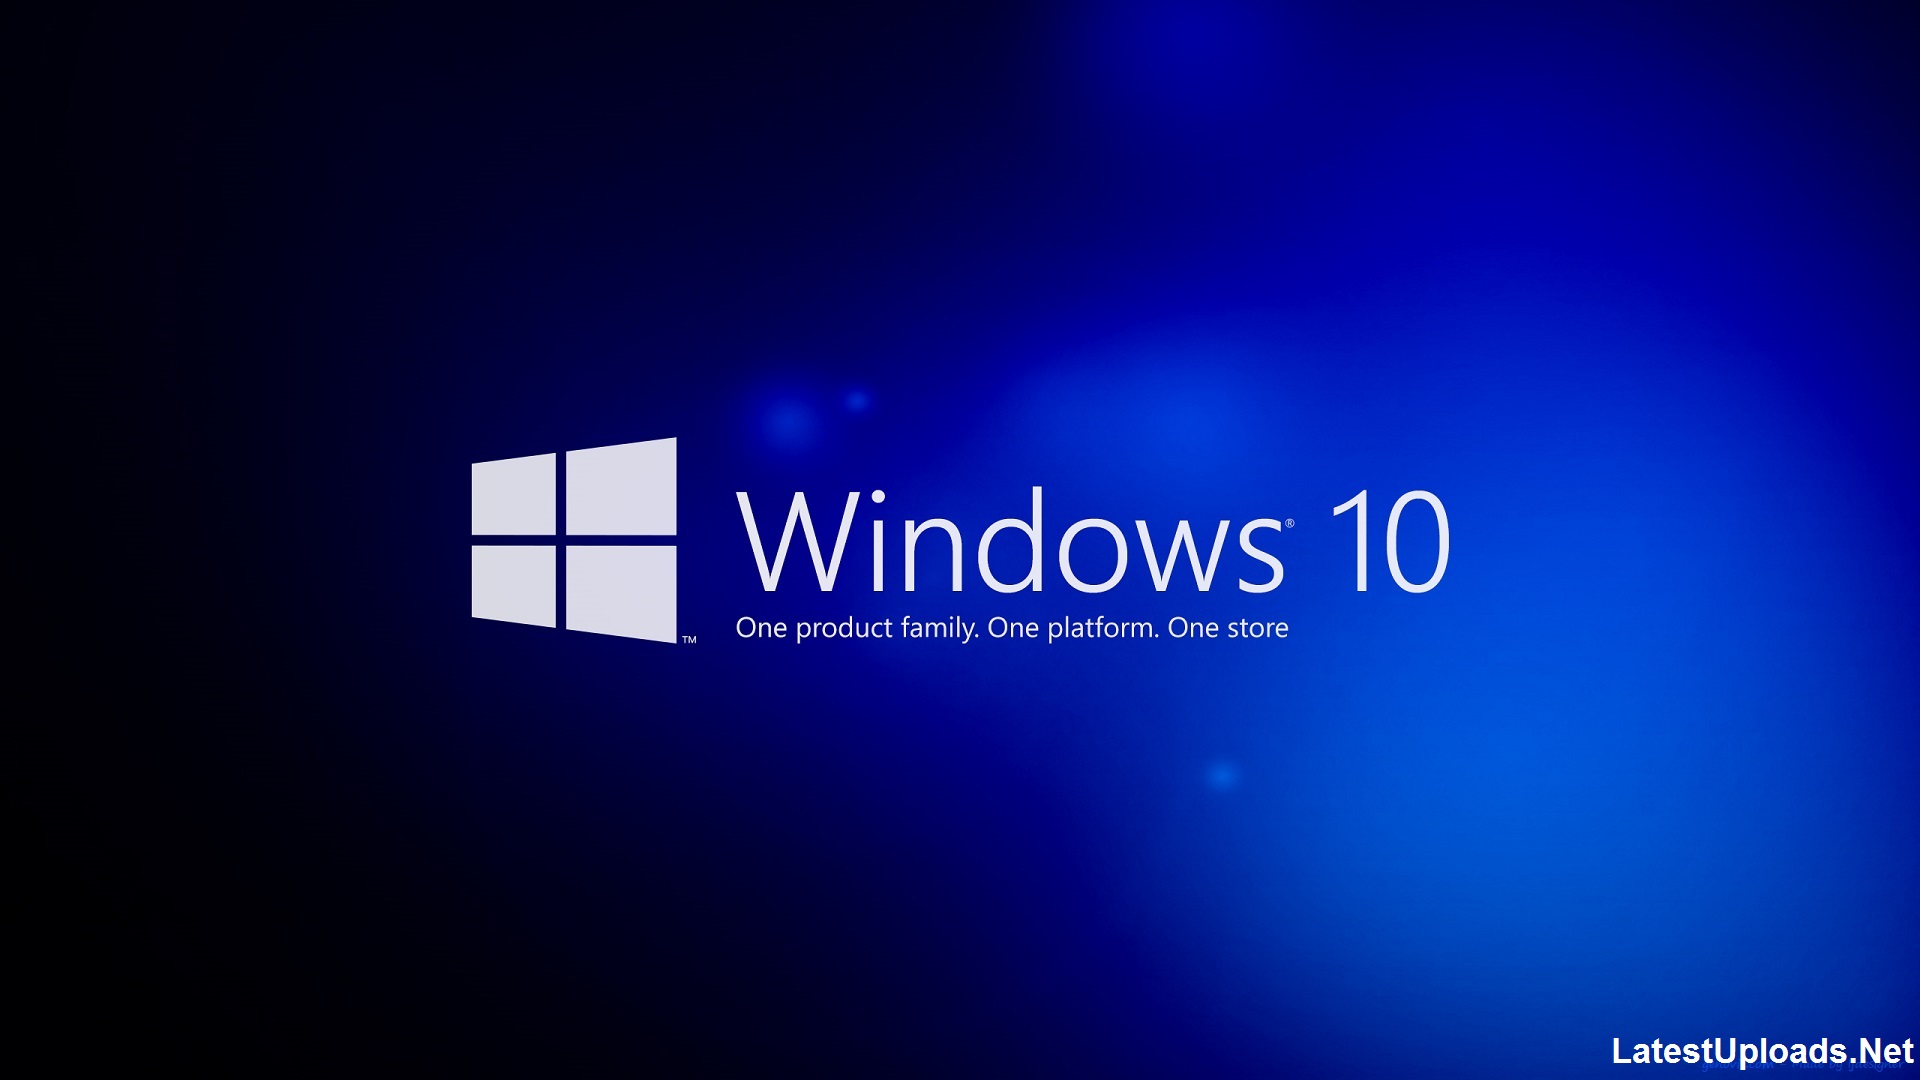 Windows 10 Full Version Free Download